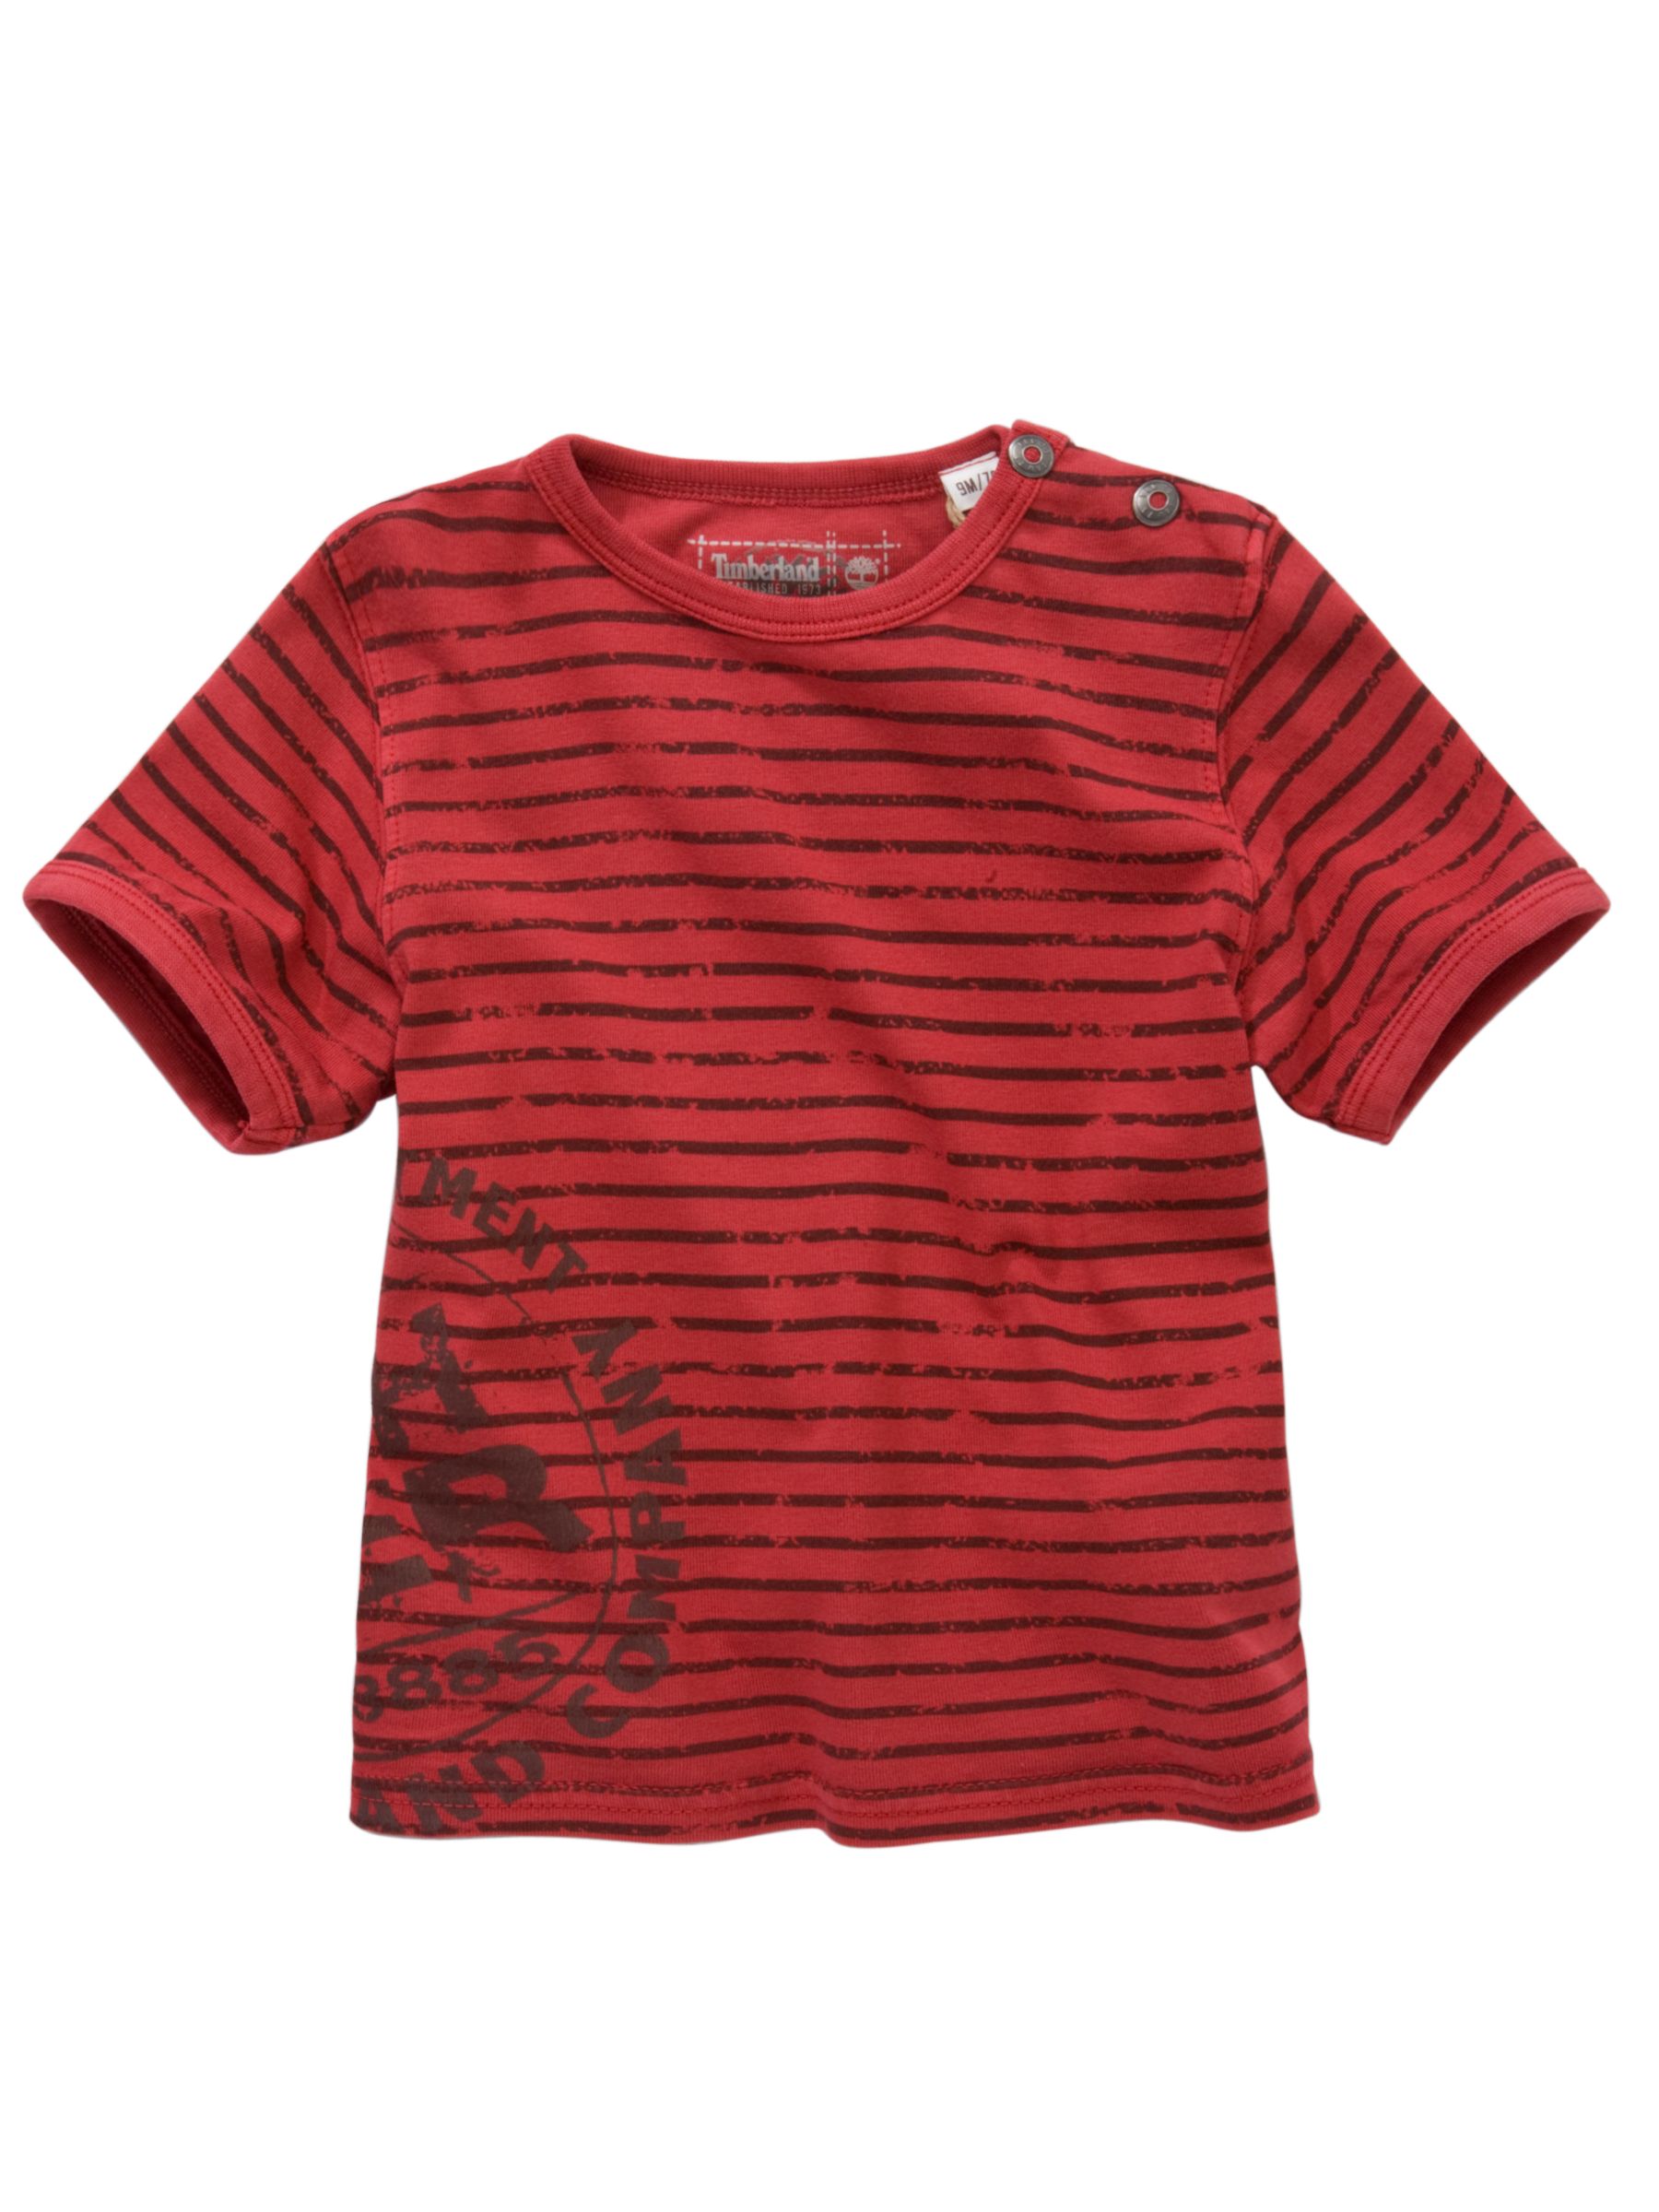 Timberland Stripe Short Sleeve T-Shirt, Red